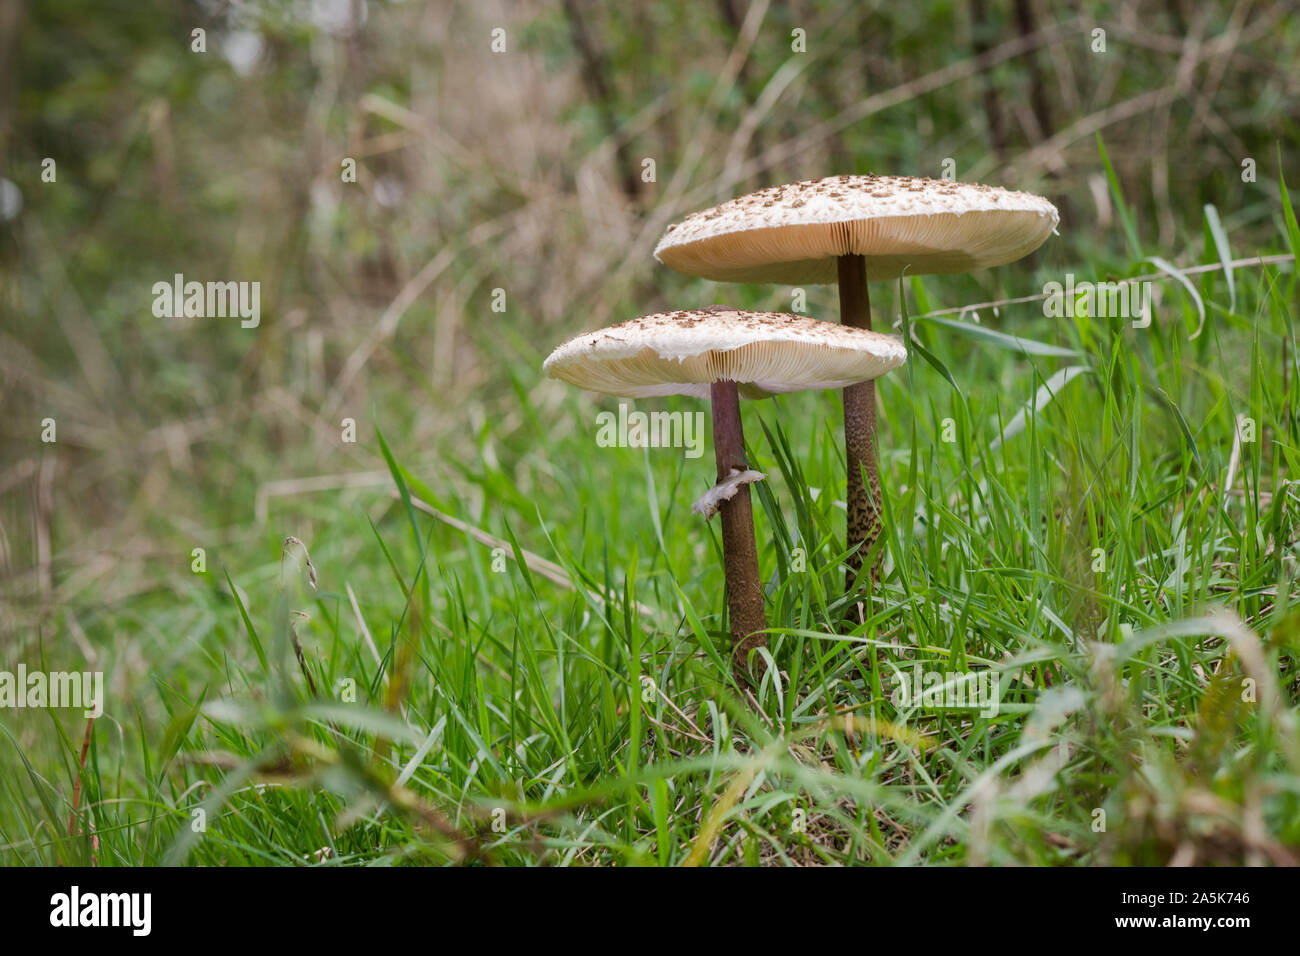 Parasol mushrooms in a green meadow, Parasol mushroom is a edible mushroom, (Macrolepiota procera), Netherlands. Stock Photo